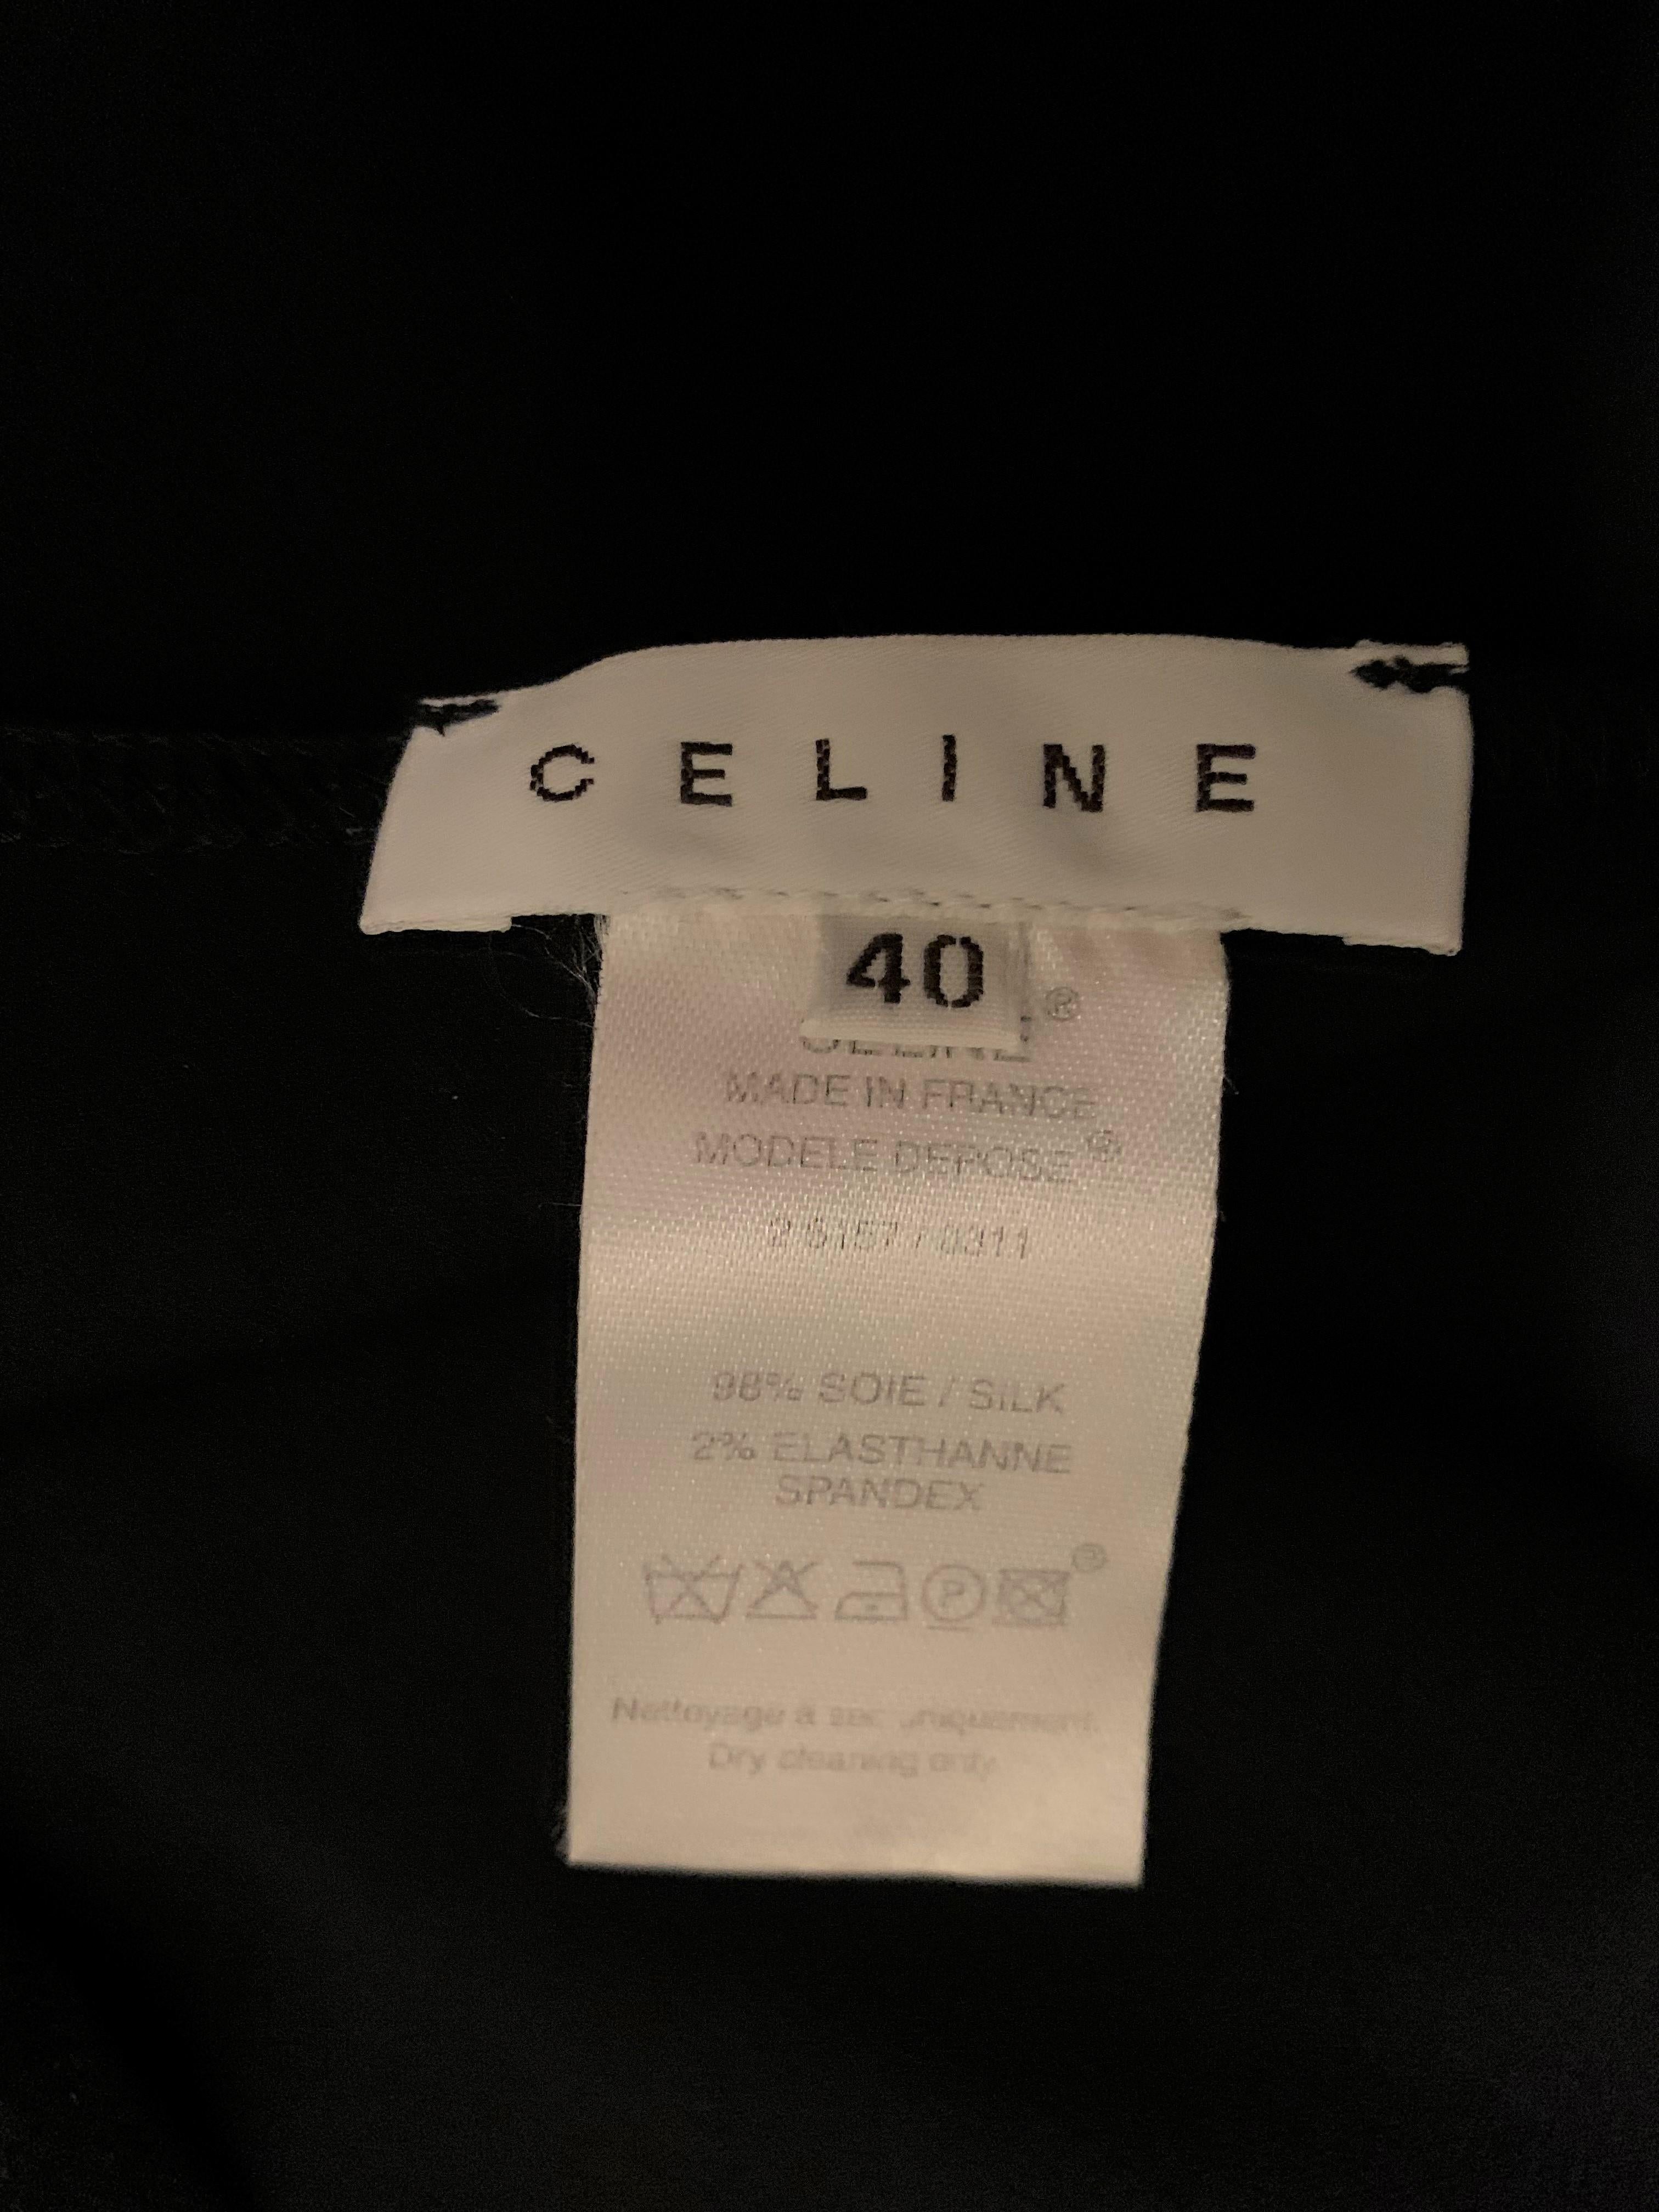 Women's S/S 2004 Celine by Michael Kors Long Black Cut-Out Plunging Dress 40